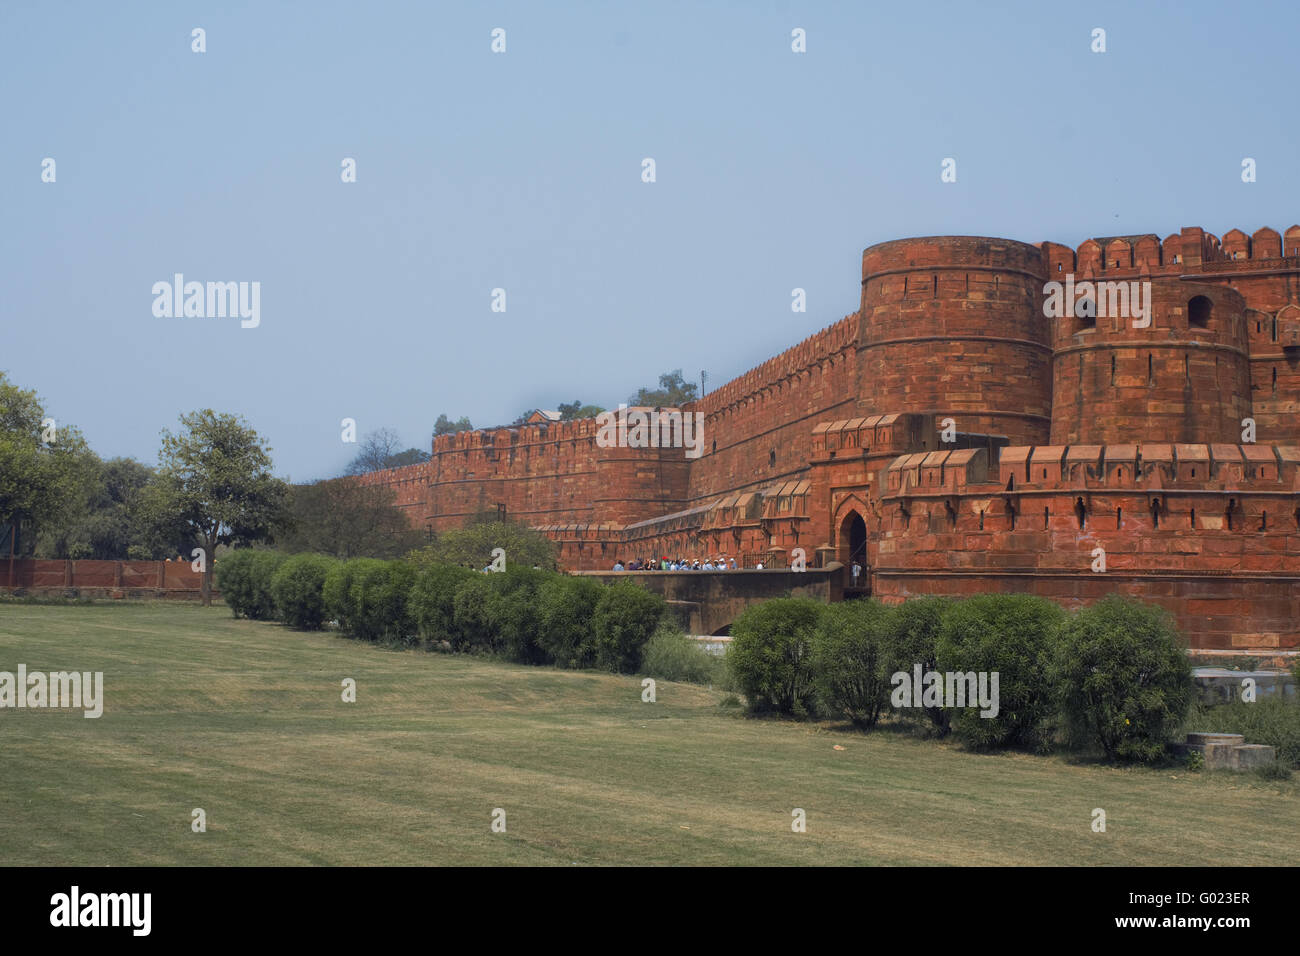 Vue avant du Fort Rouge à Agra, Inde Banque D'Images